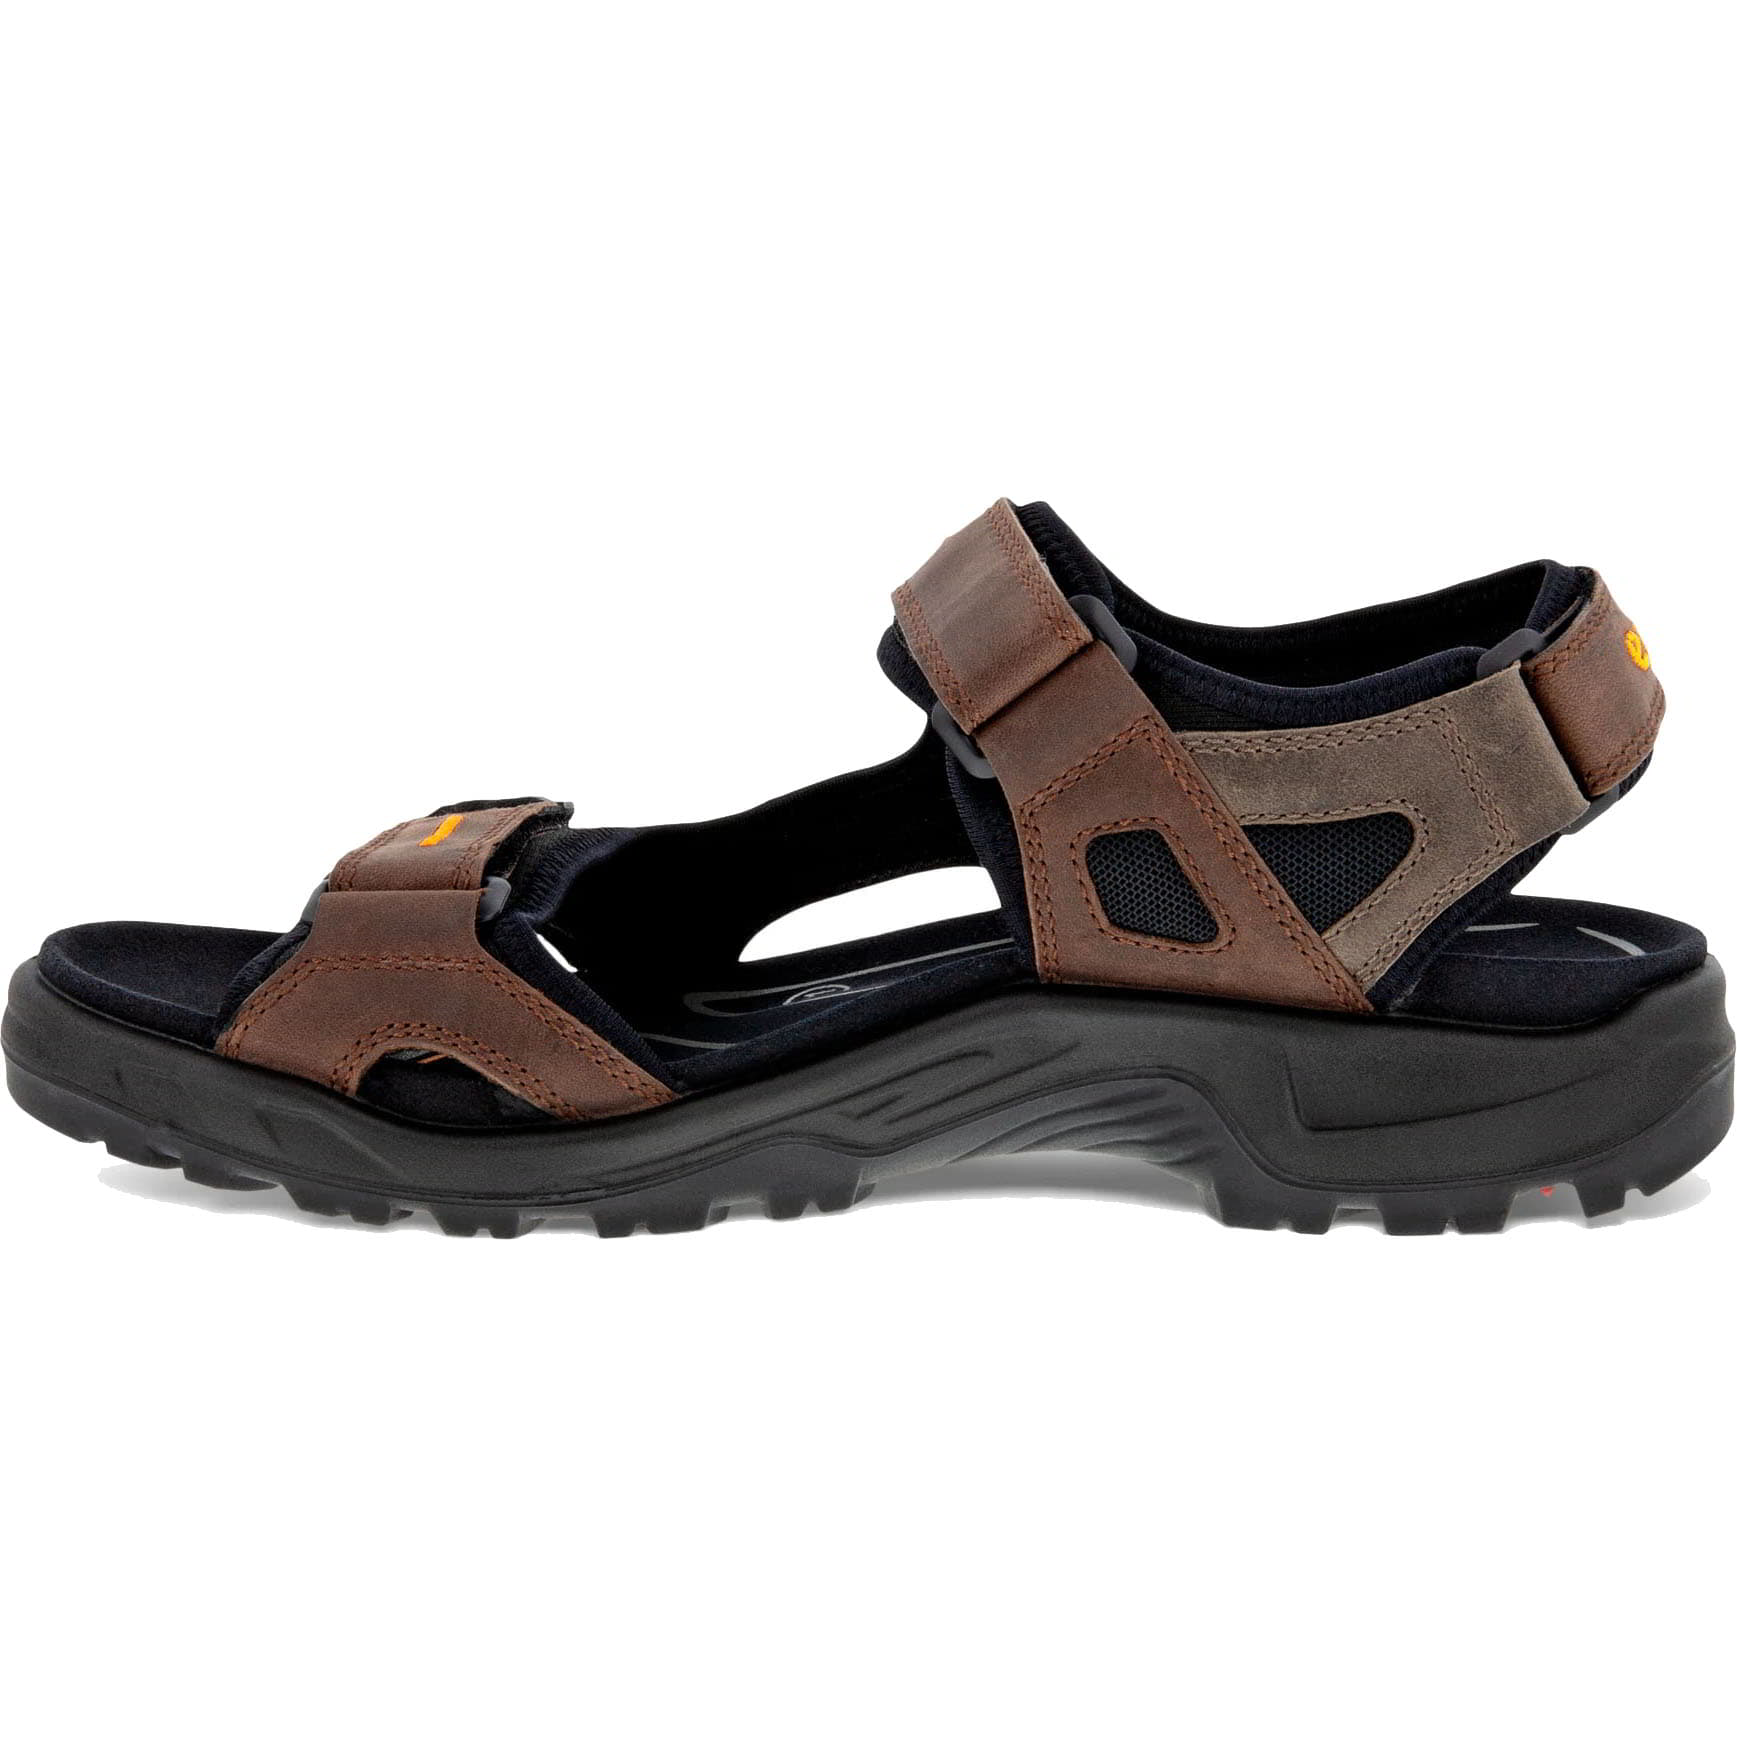 Ecco Shoes Mens Offroad Leather Walking Sandals - Morel Moon Rock 2951